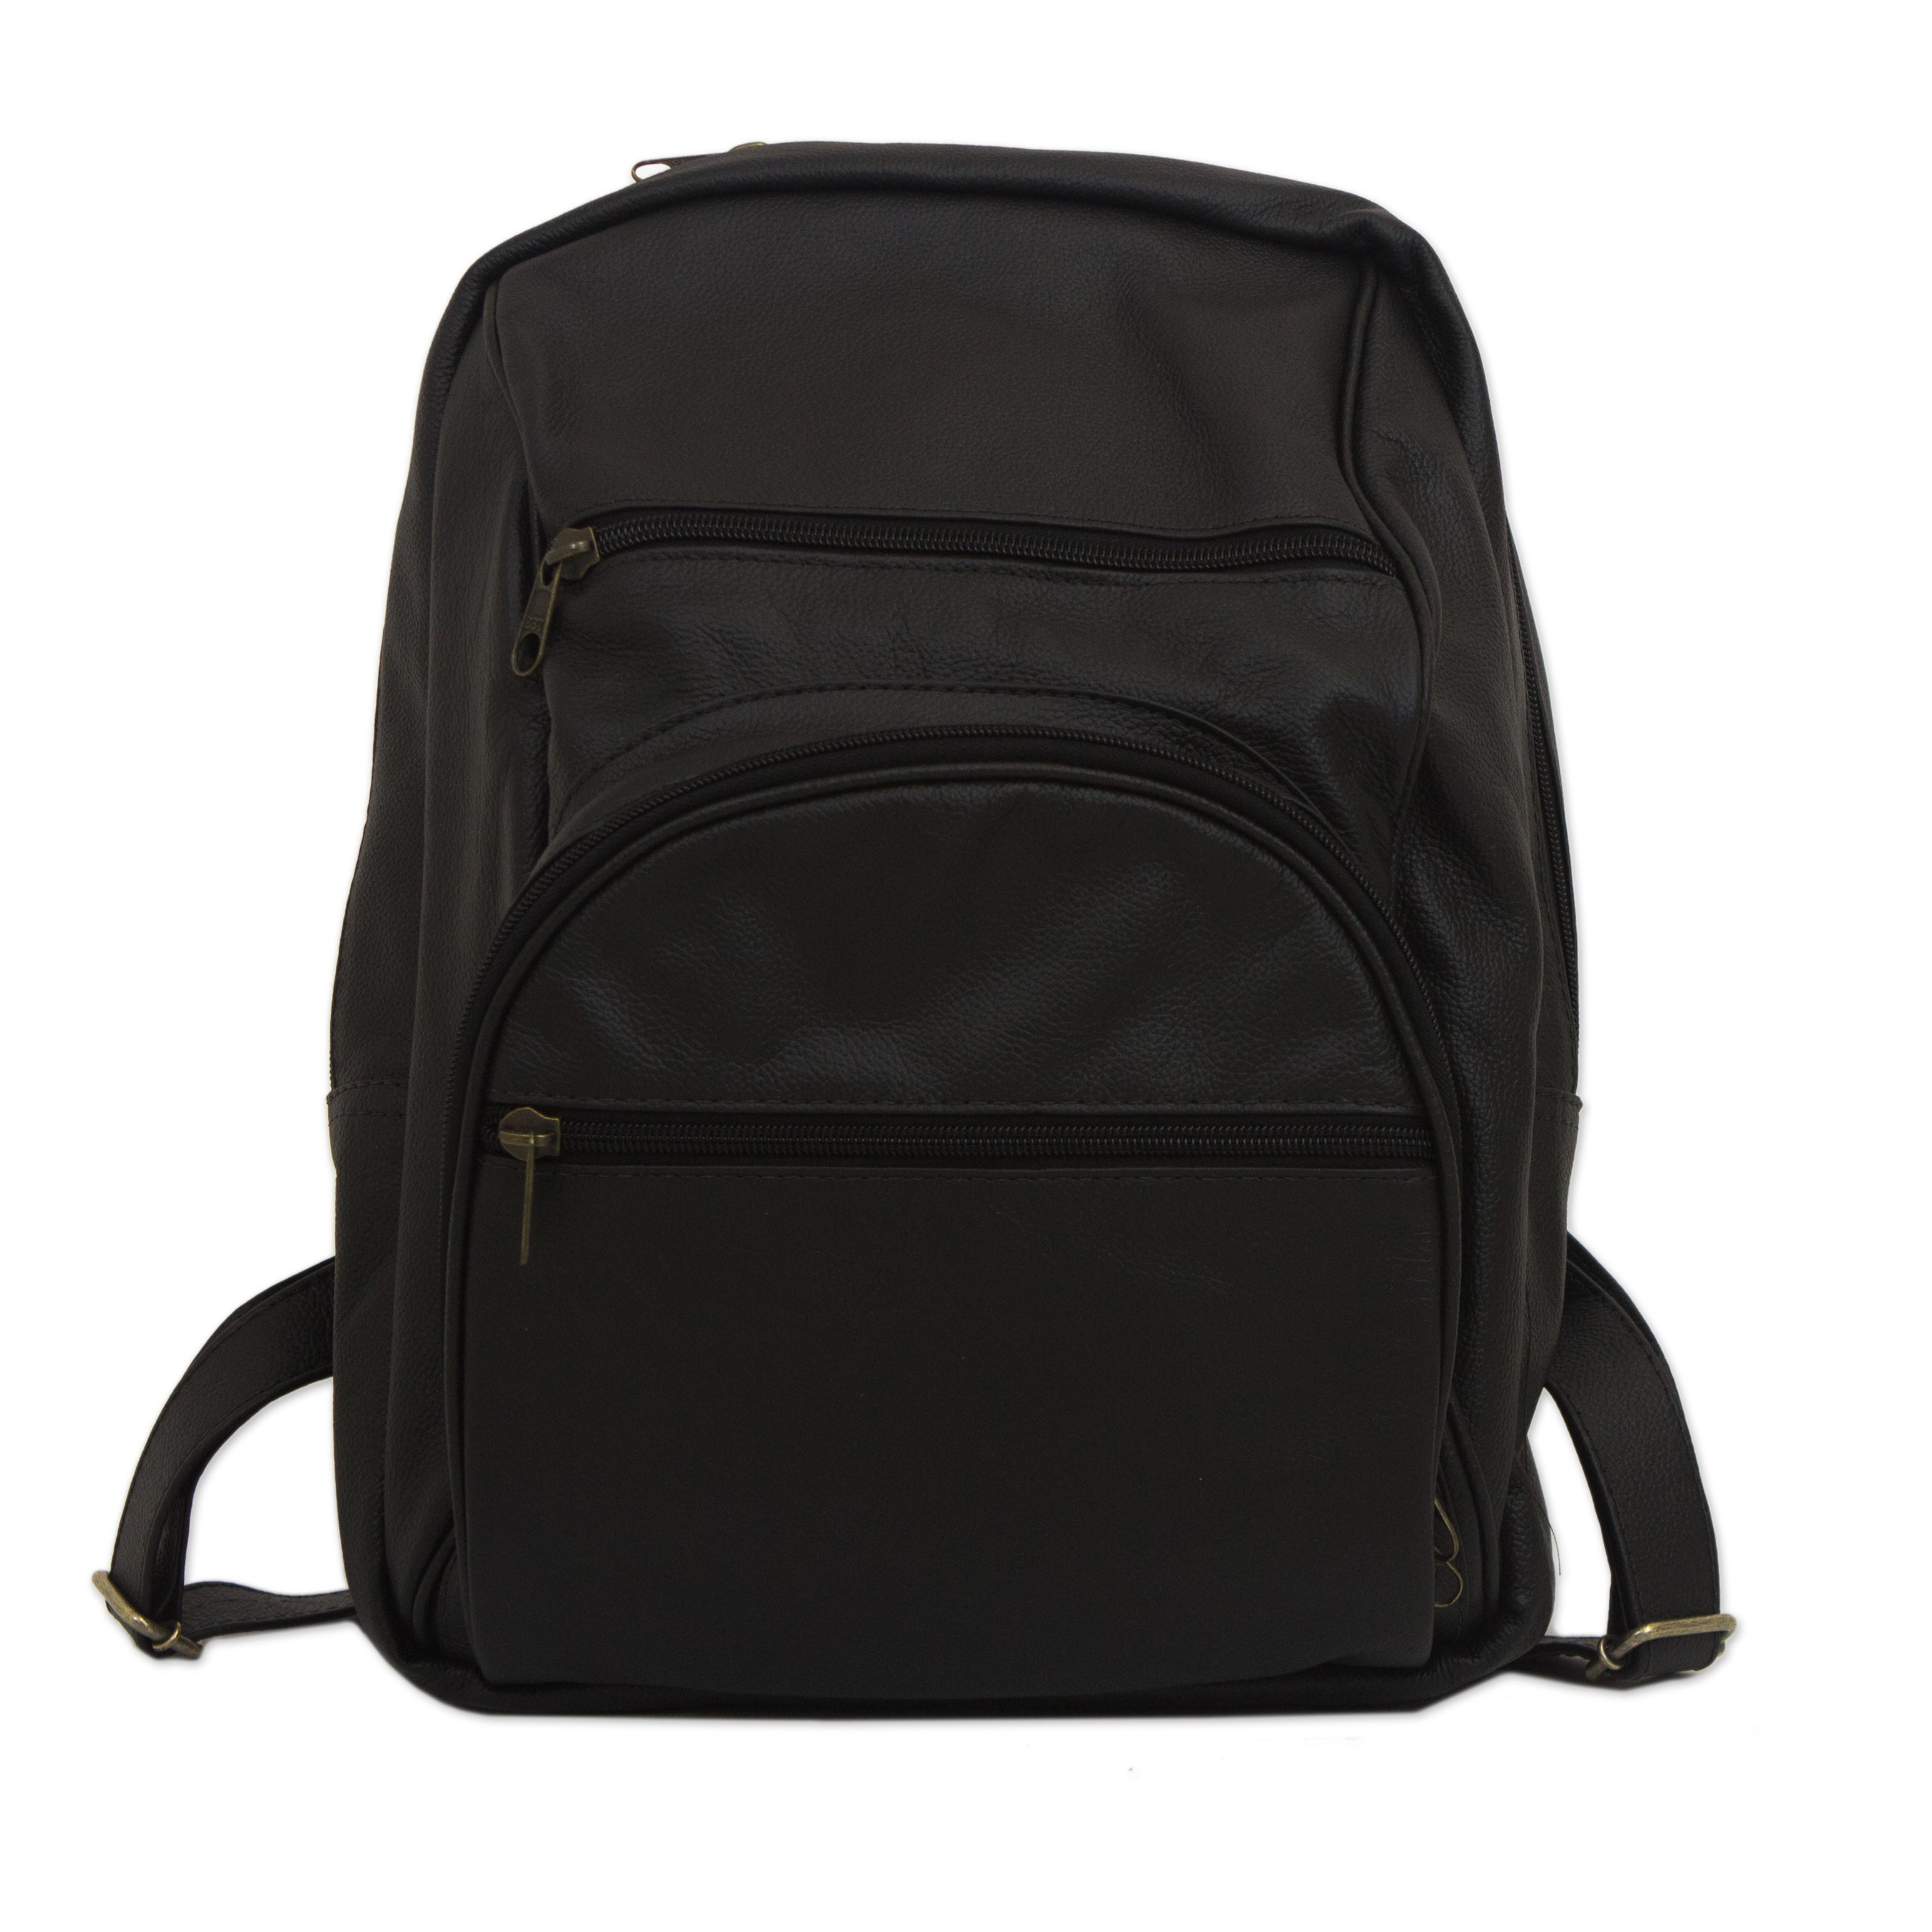 UNICEF Market | Adjustable Leather Backpack in Black from Brazil ...